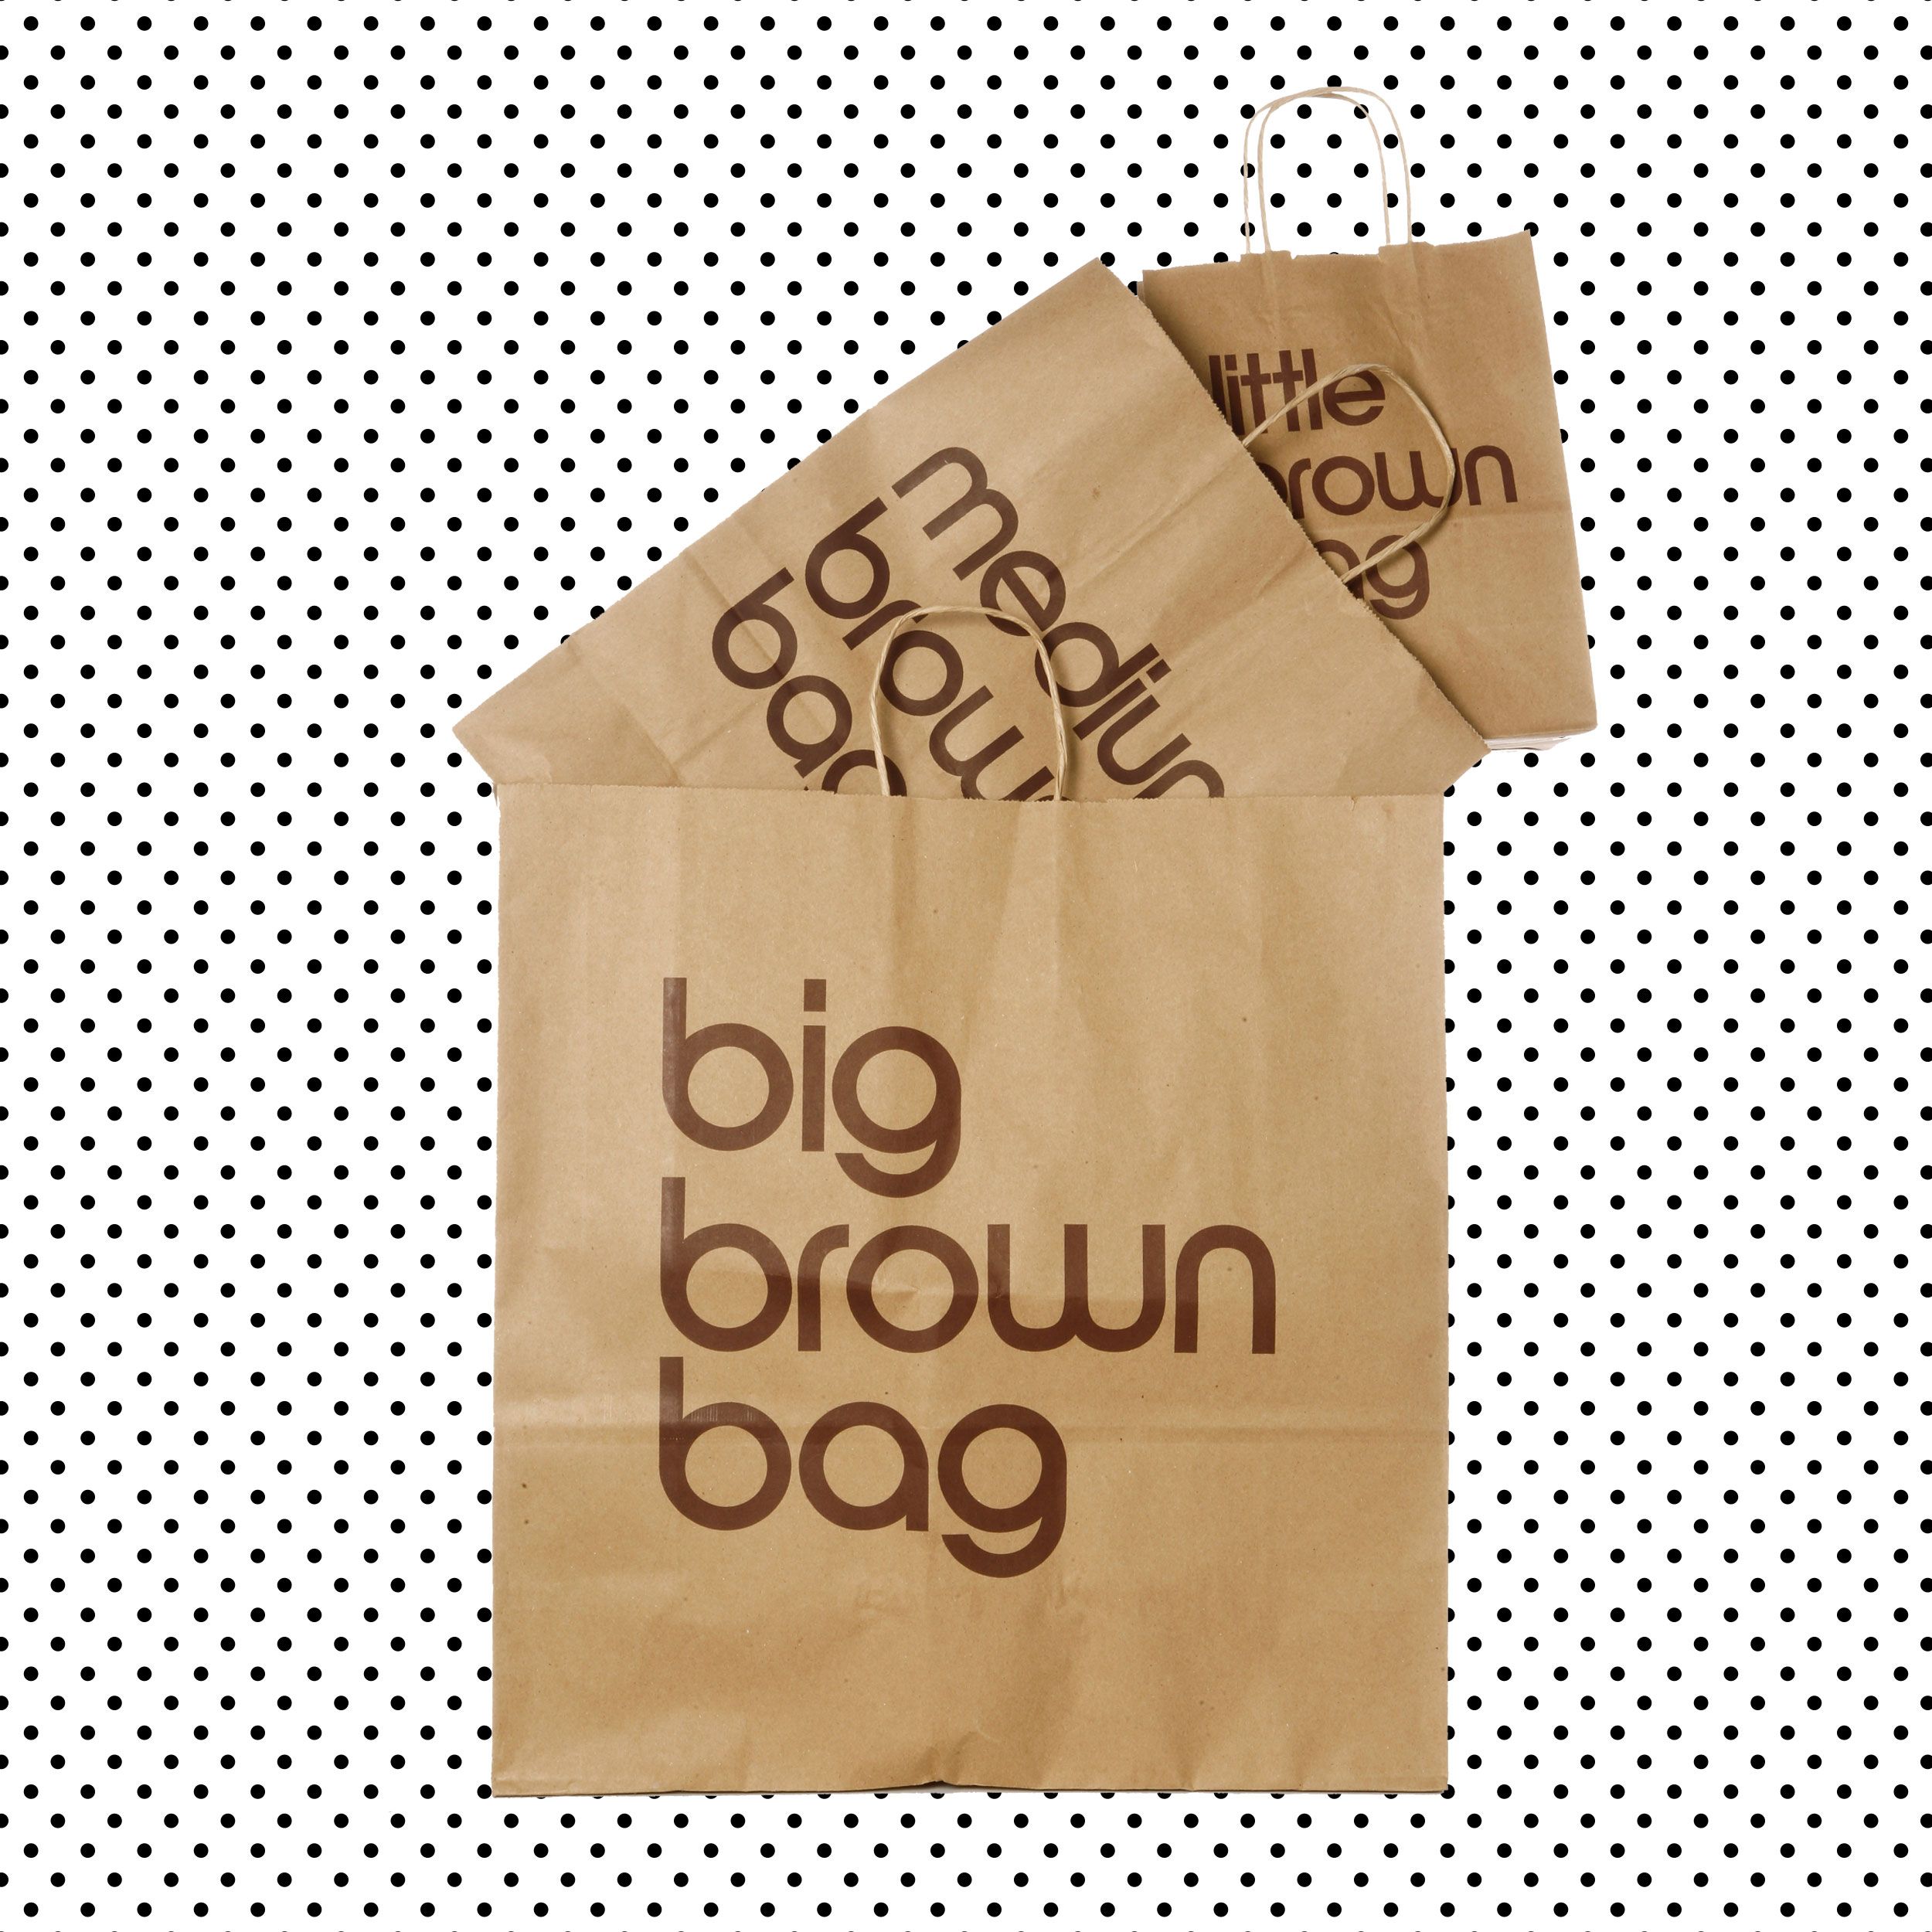 Who Made That Big Brown Bag? - The New York Times